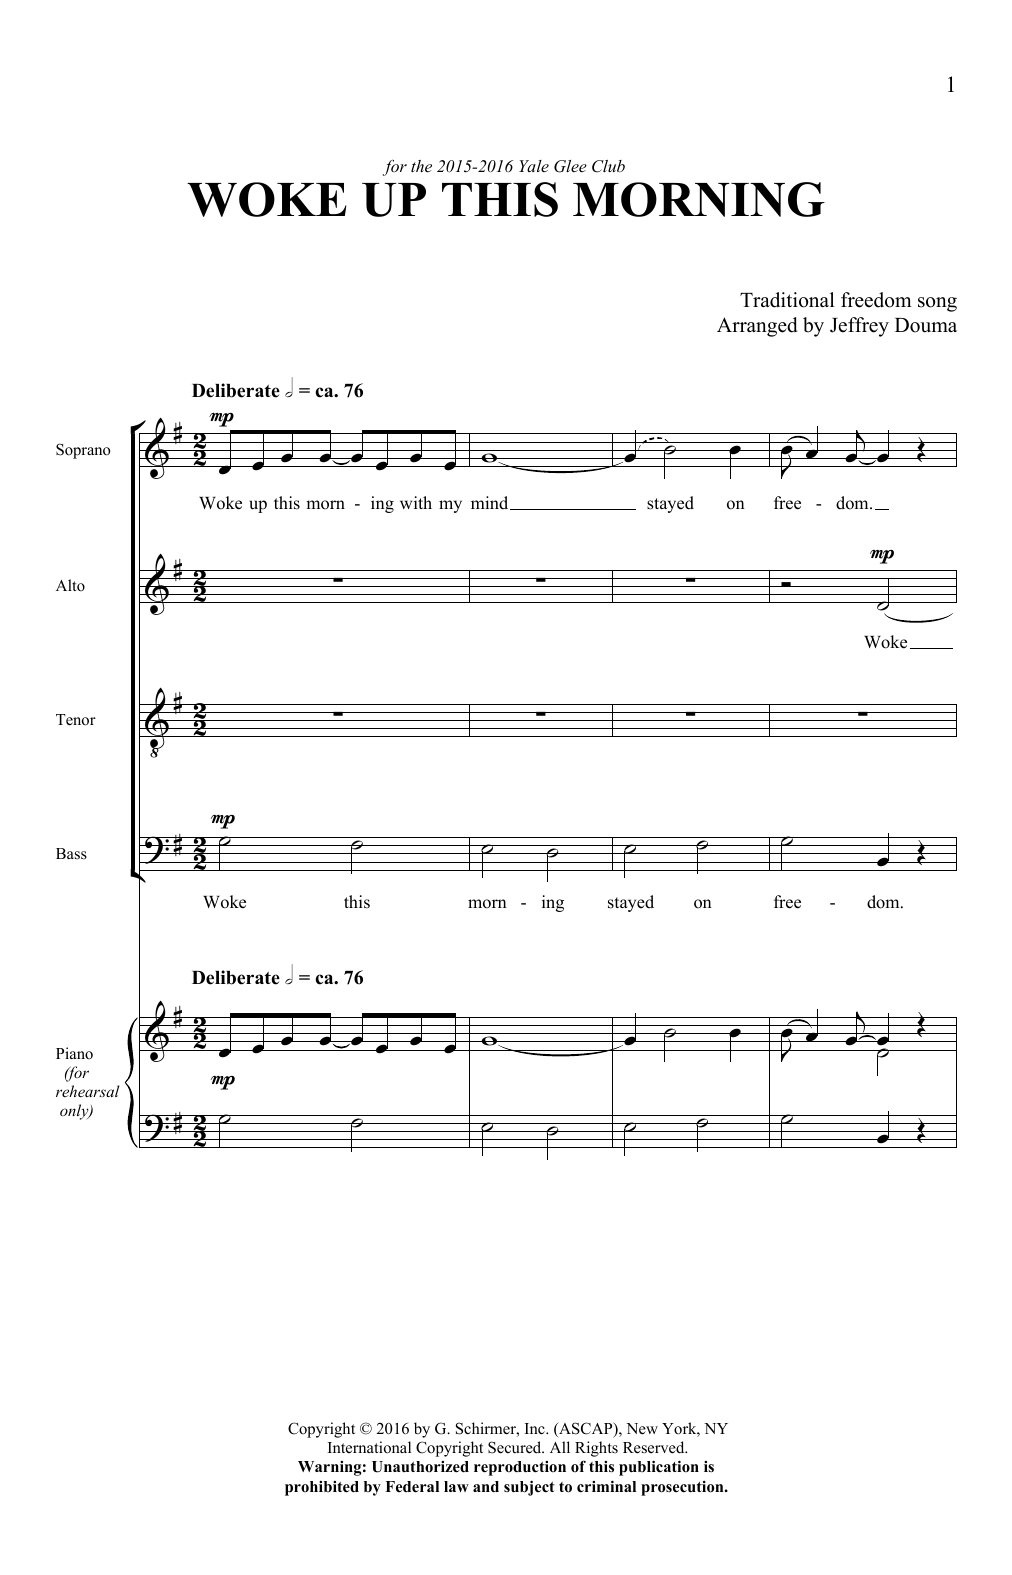 Jeffrey Douma Woke Up This Morning Sheet Music Notes & Chords for SATB - Download or Print PDF